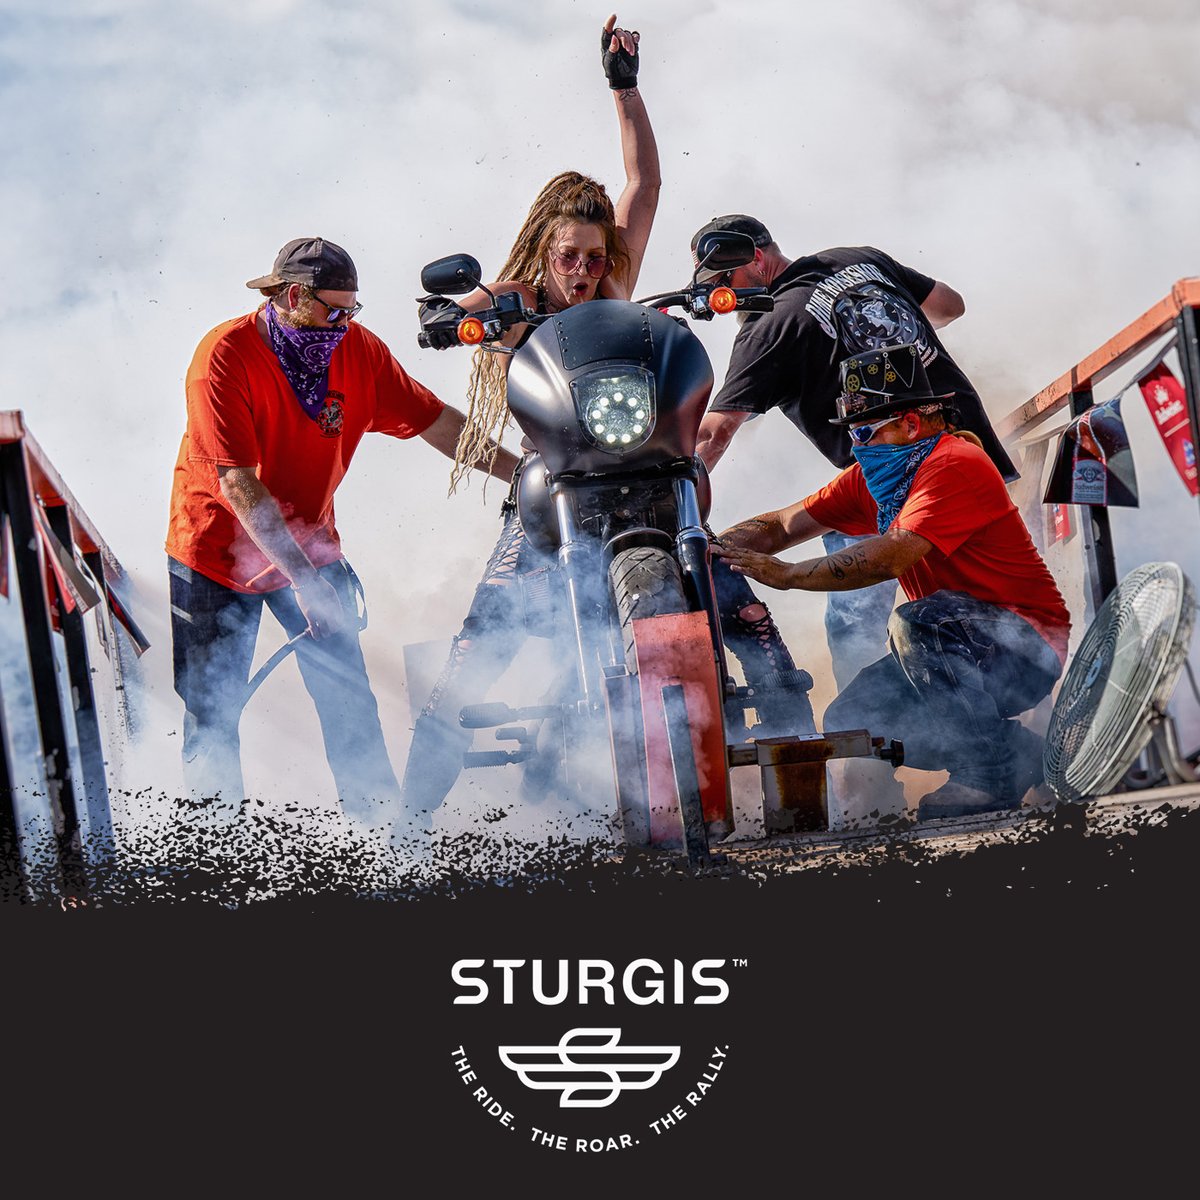 Burning rubber 💨 - #sturgis #sturgisrally